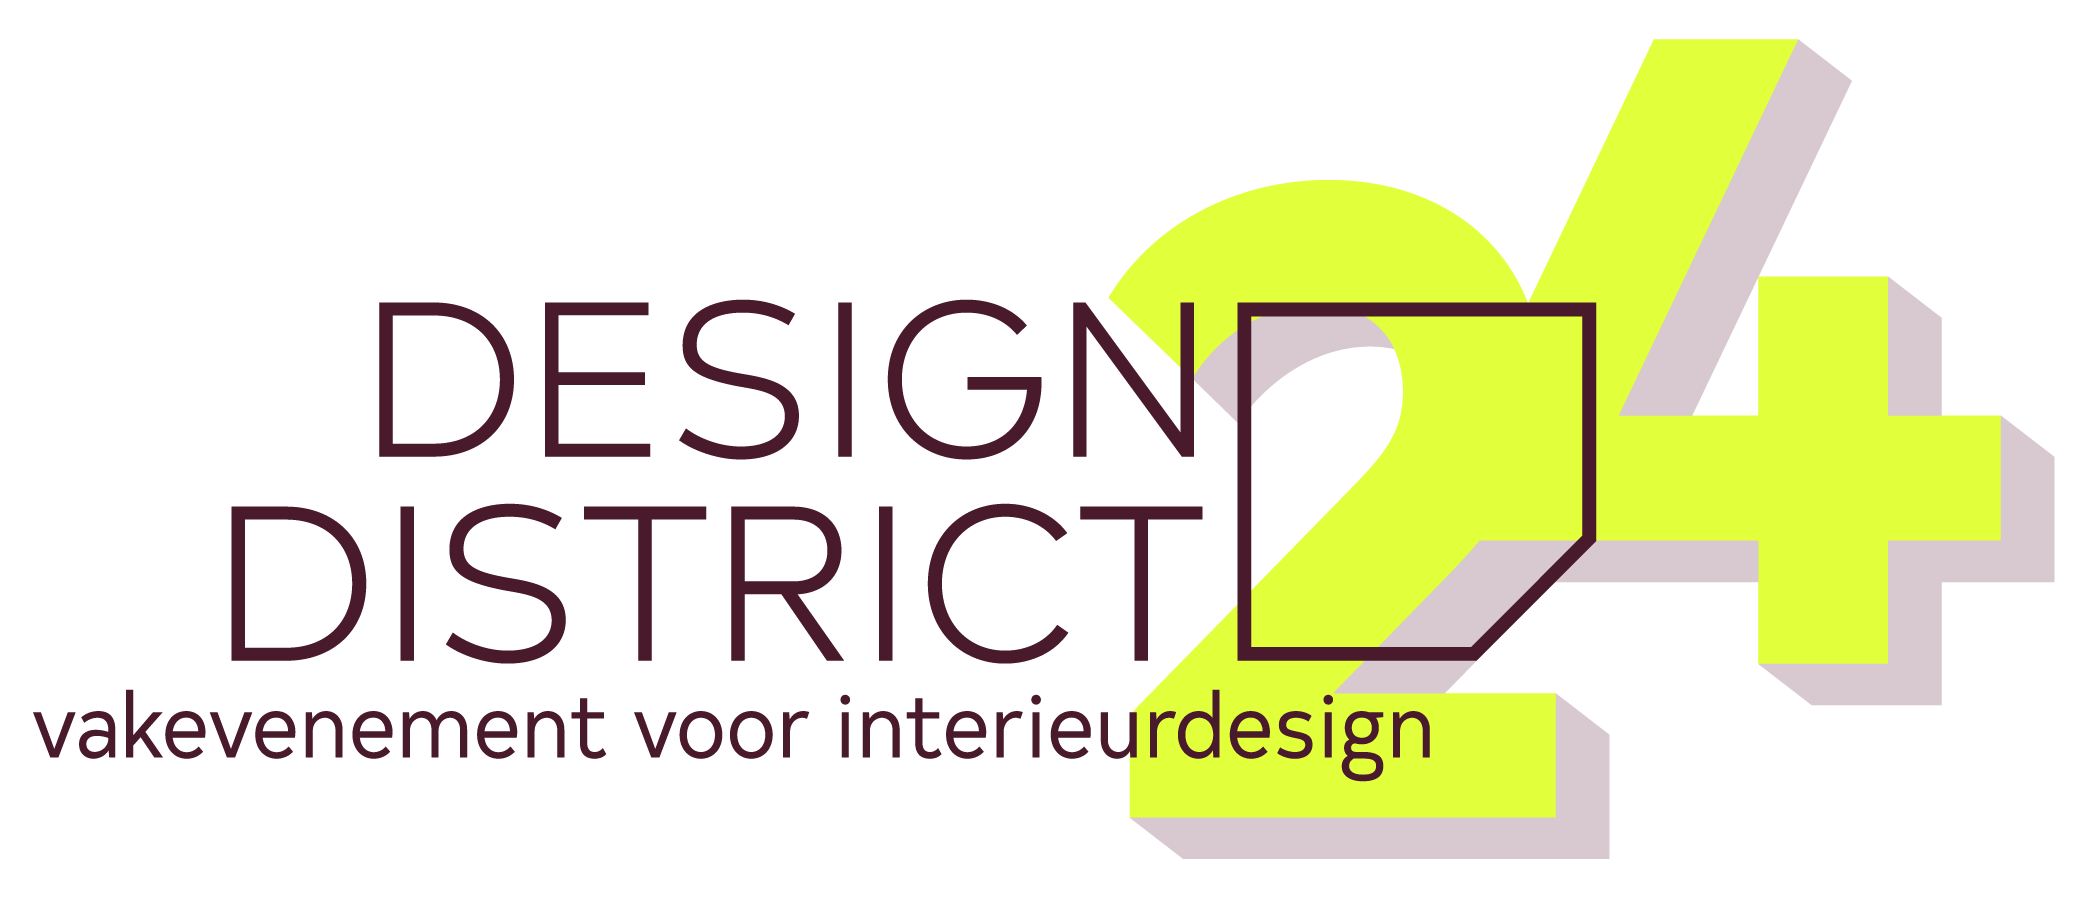 Design district logo